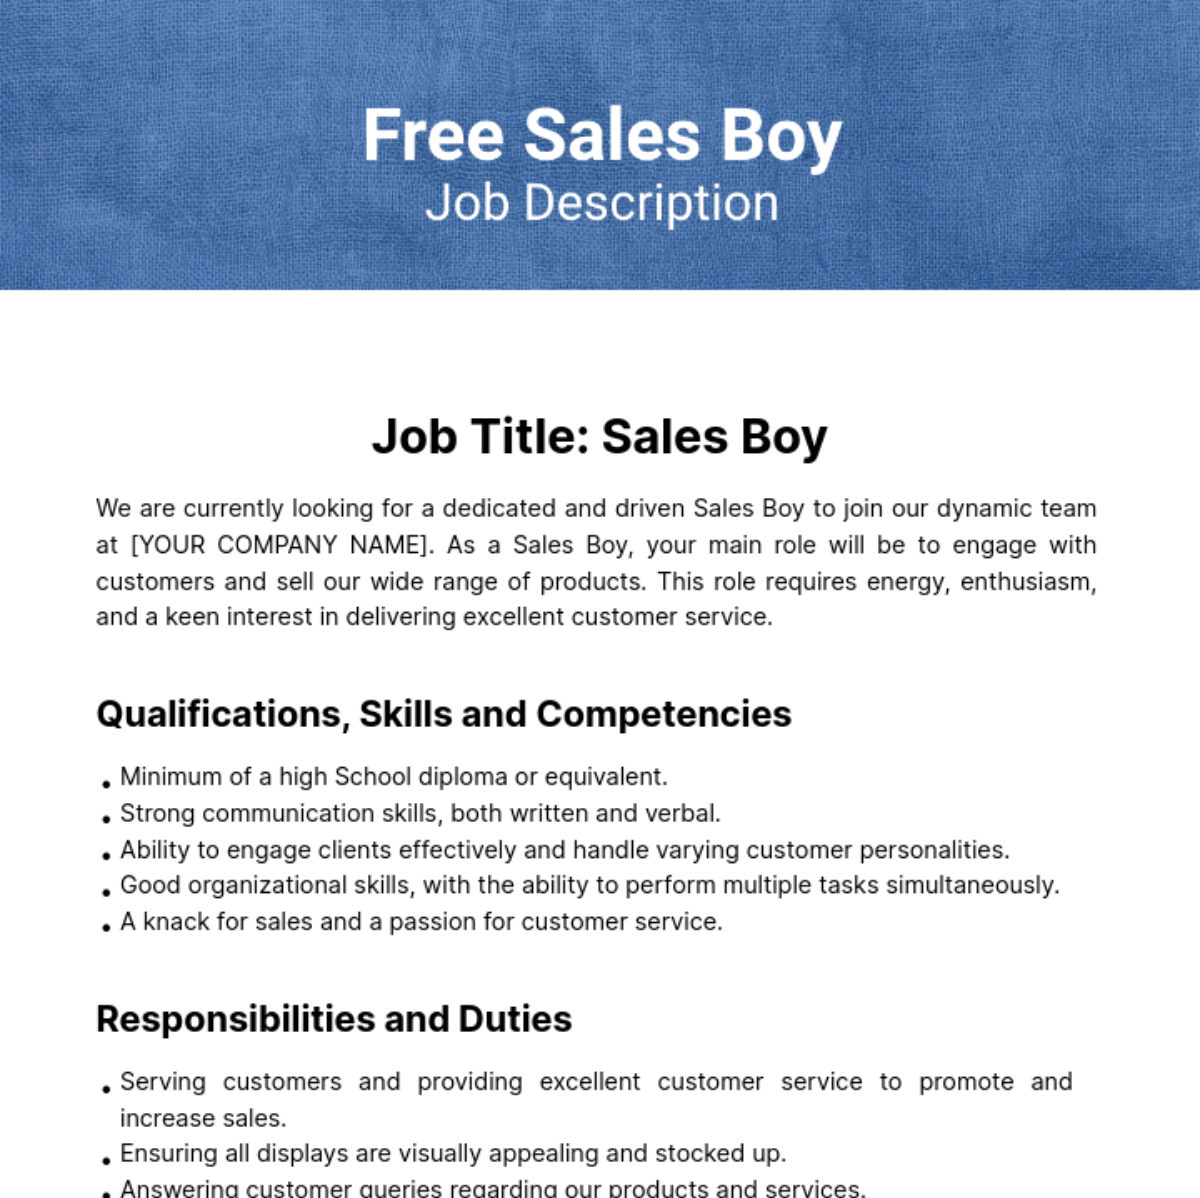 Free Sales Boy Job Description Template